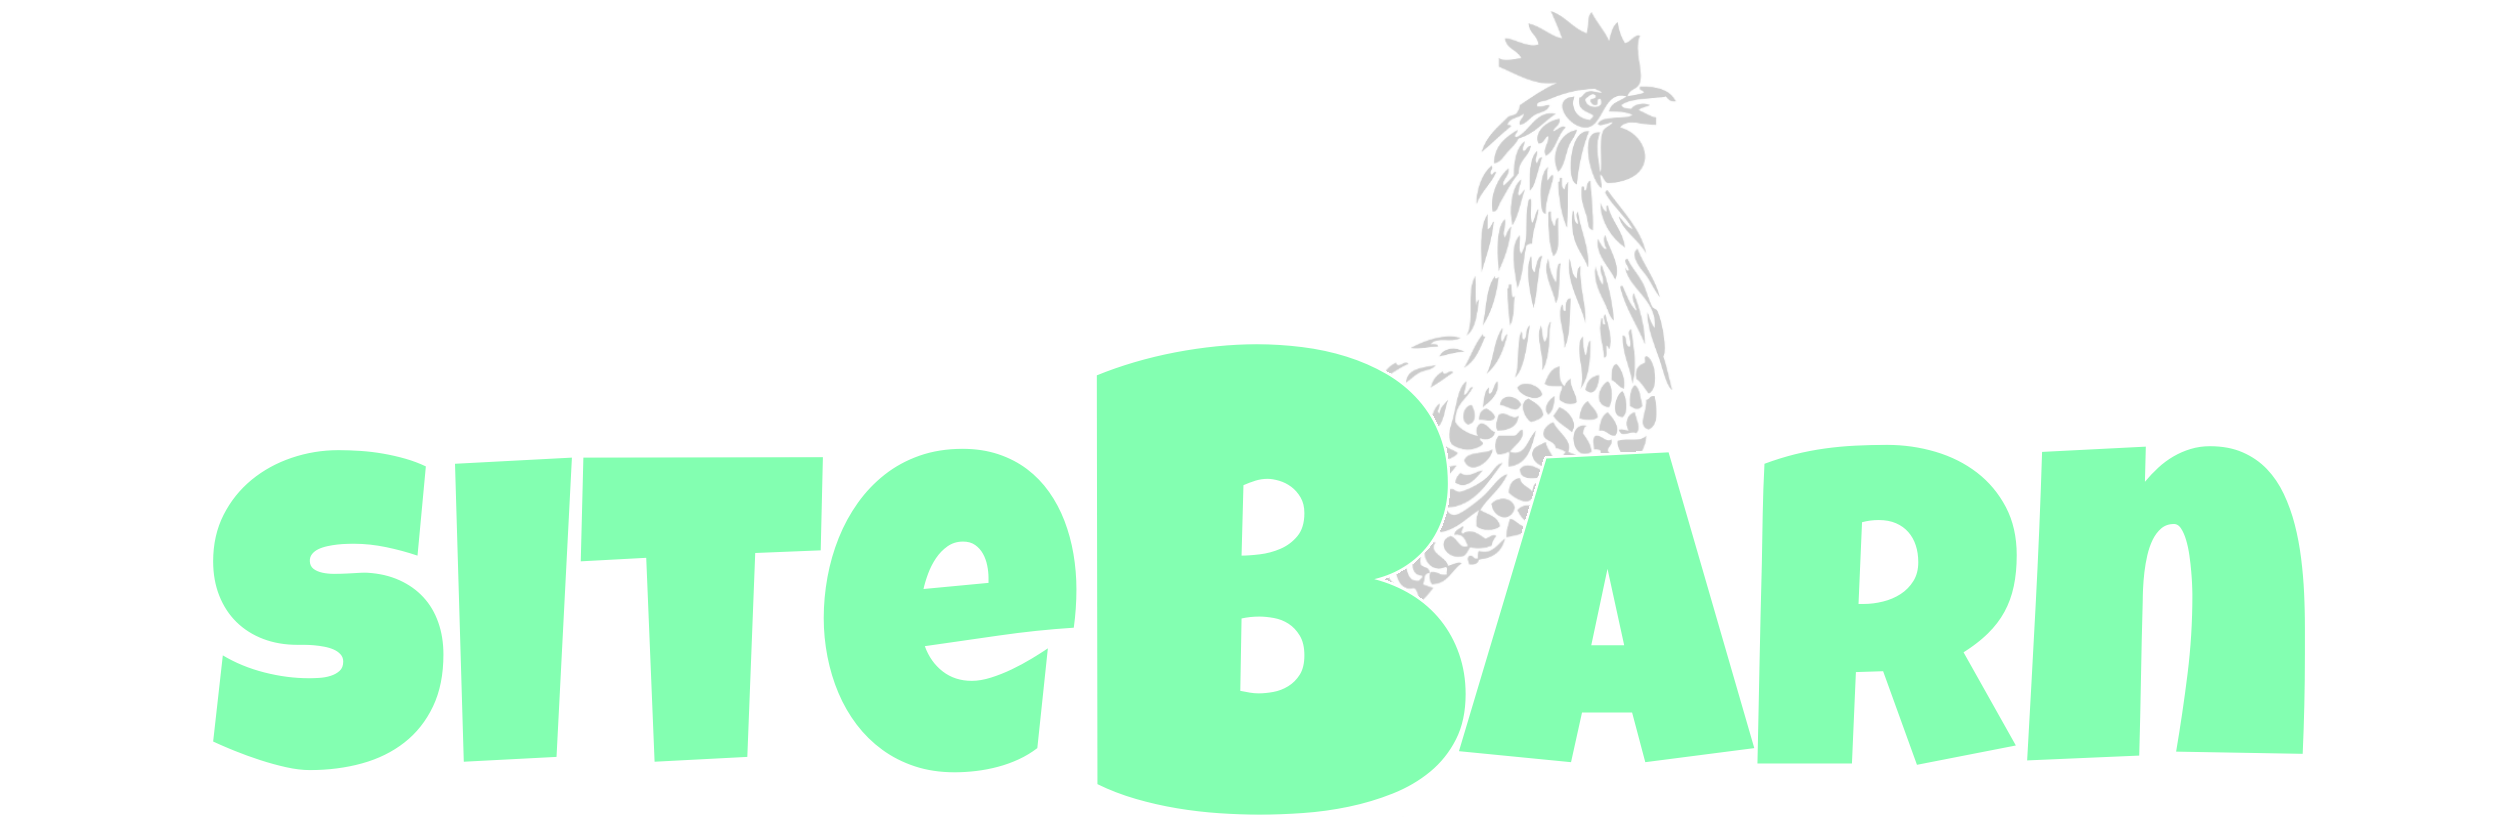 Site-Barn Logo